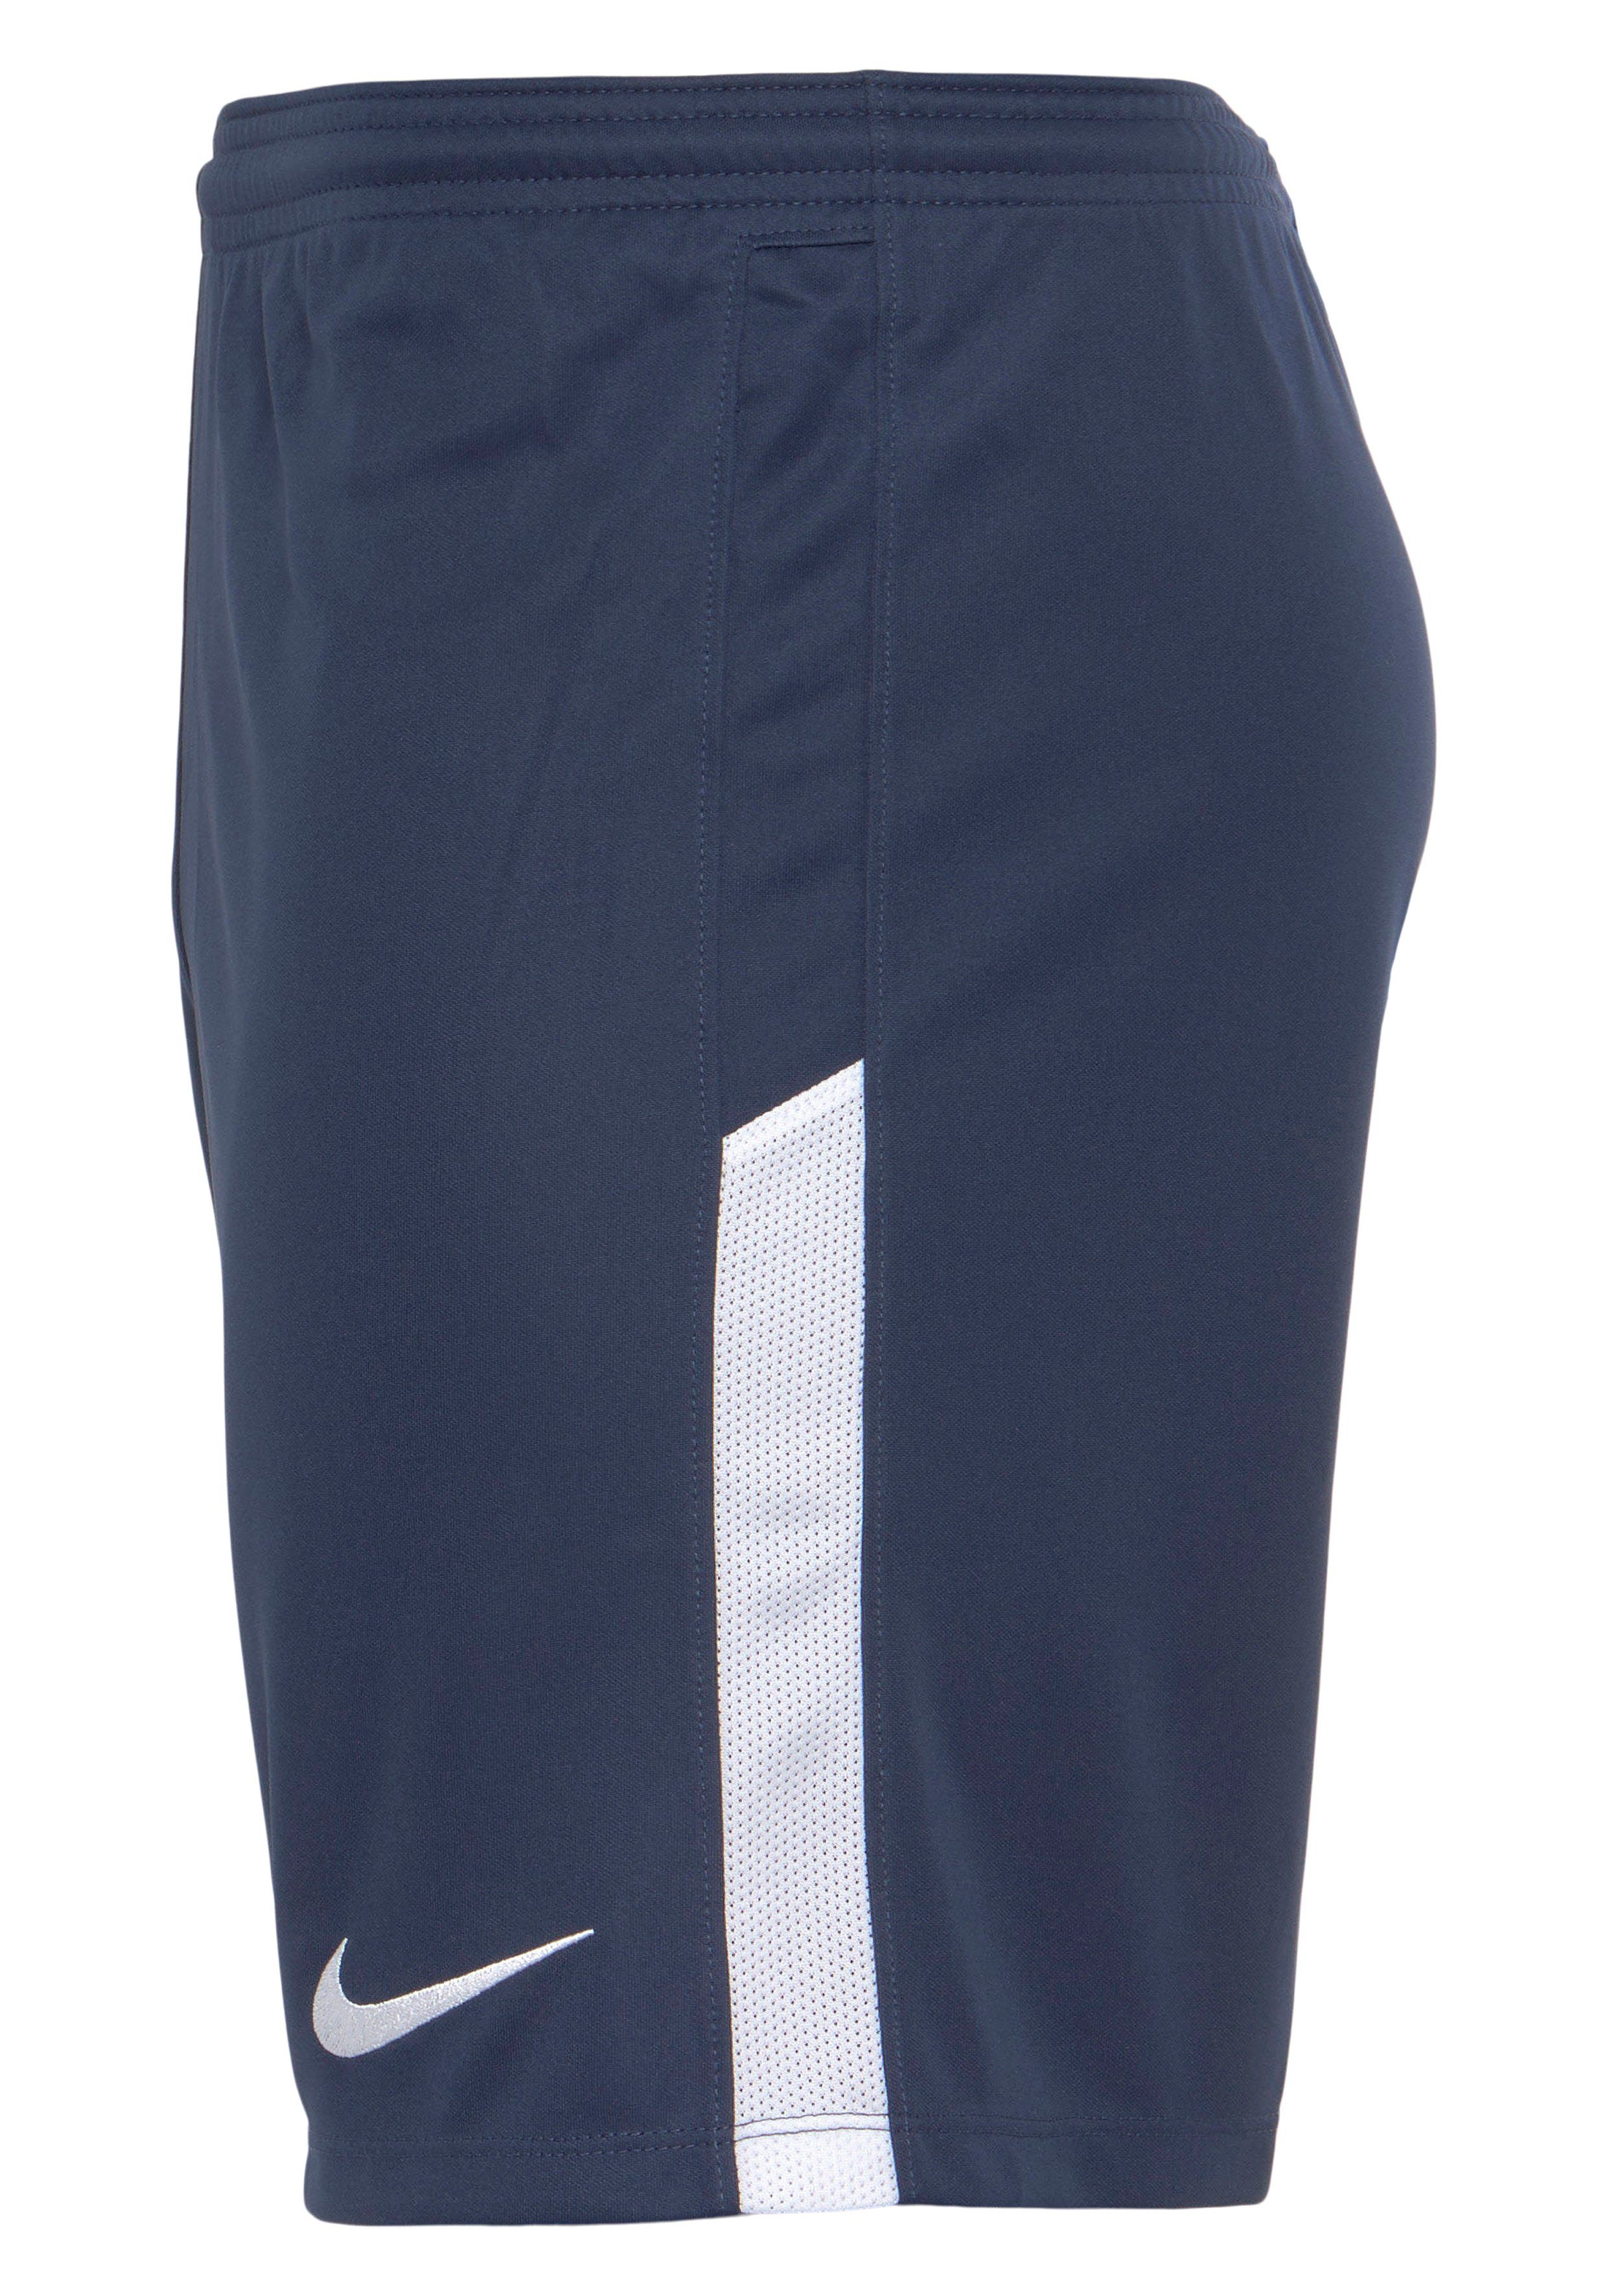 Shorts Nike League Short Knit Nike navy